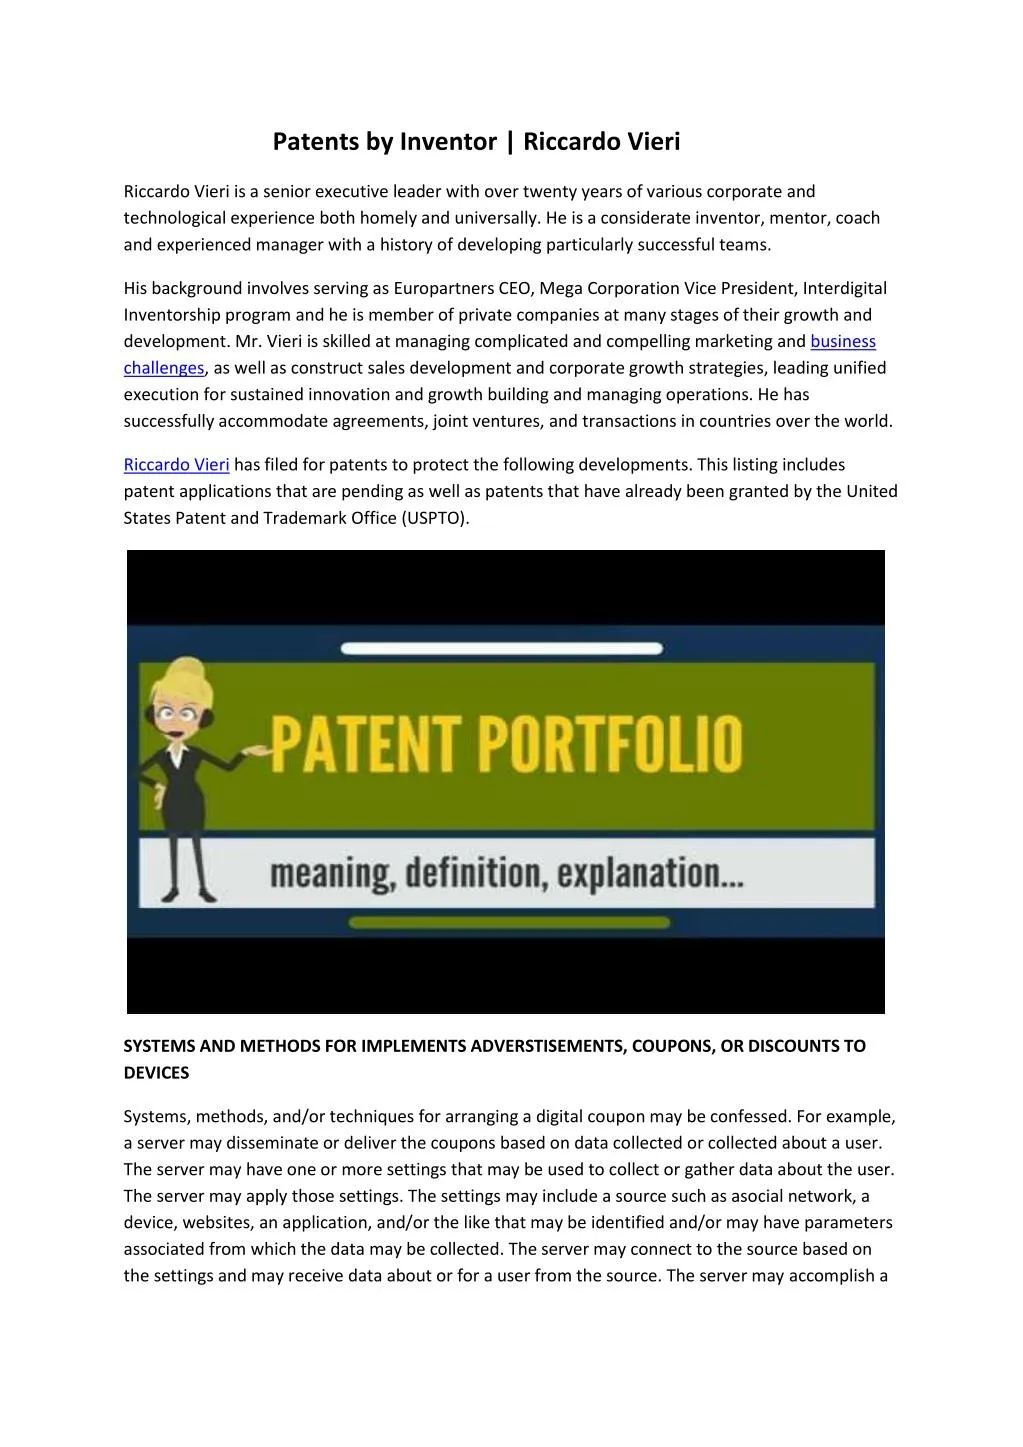 patents by inventor riccardo vieri